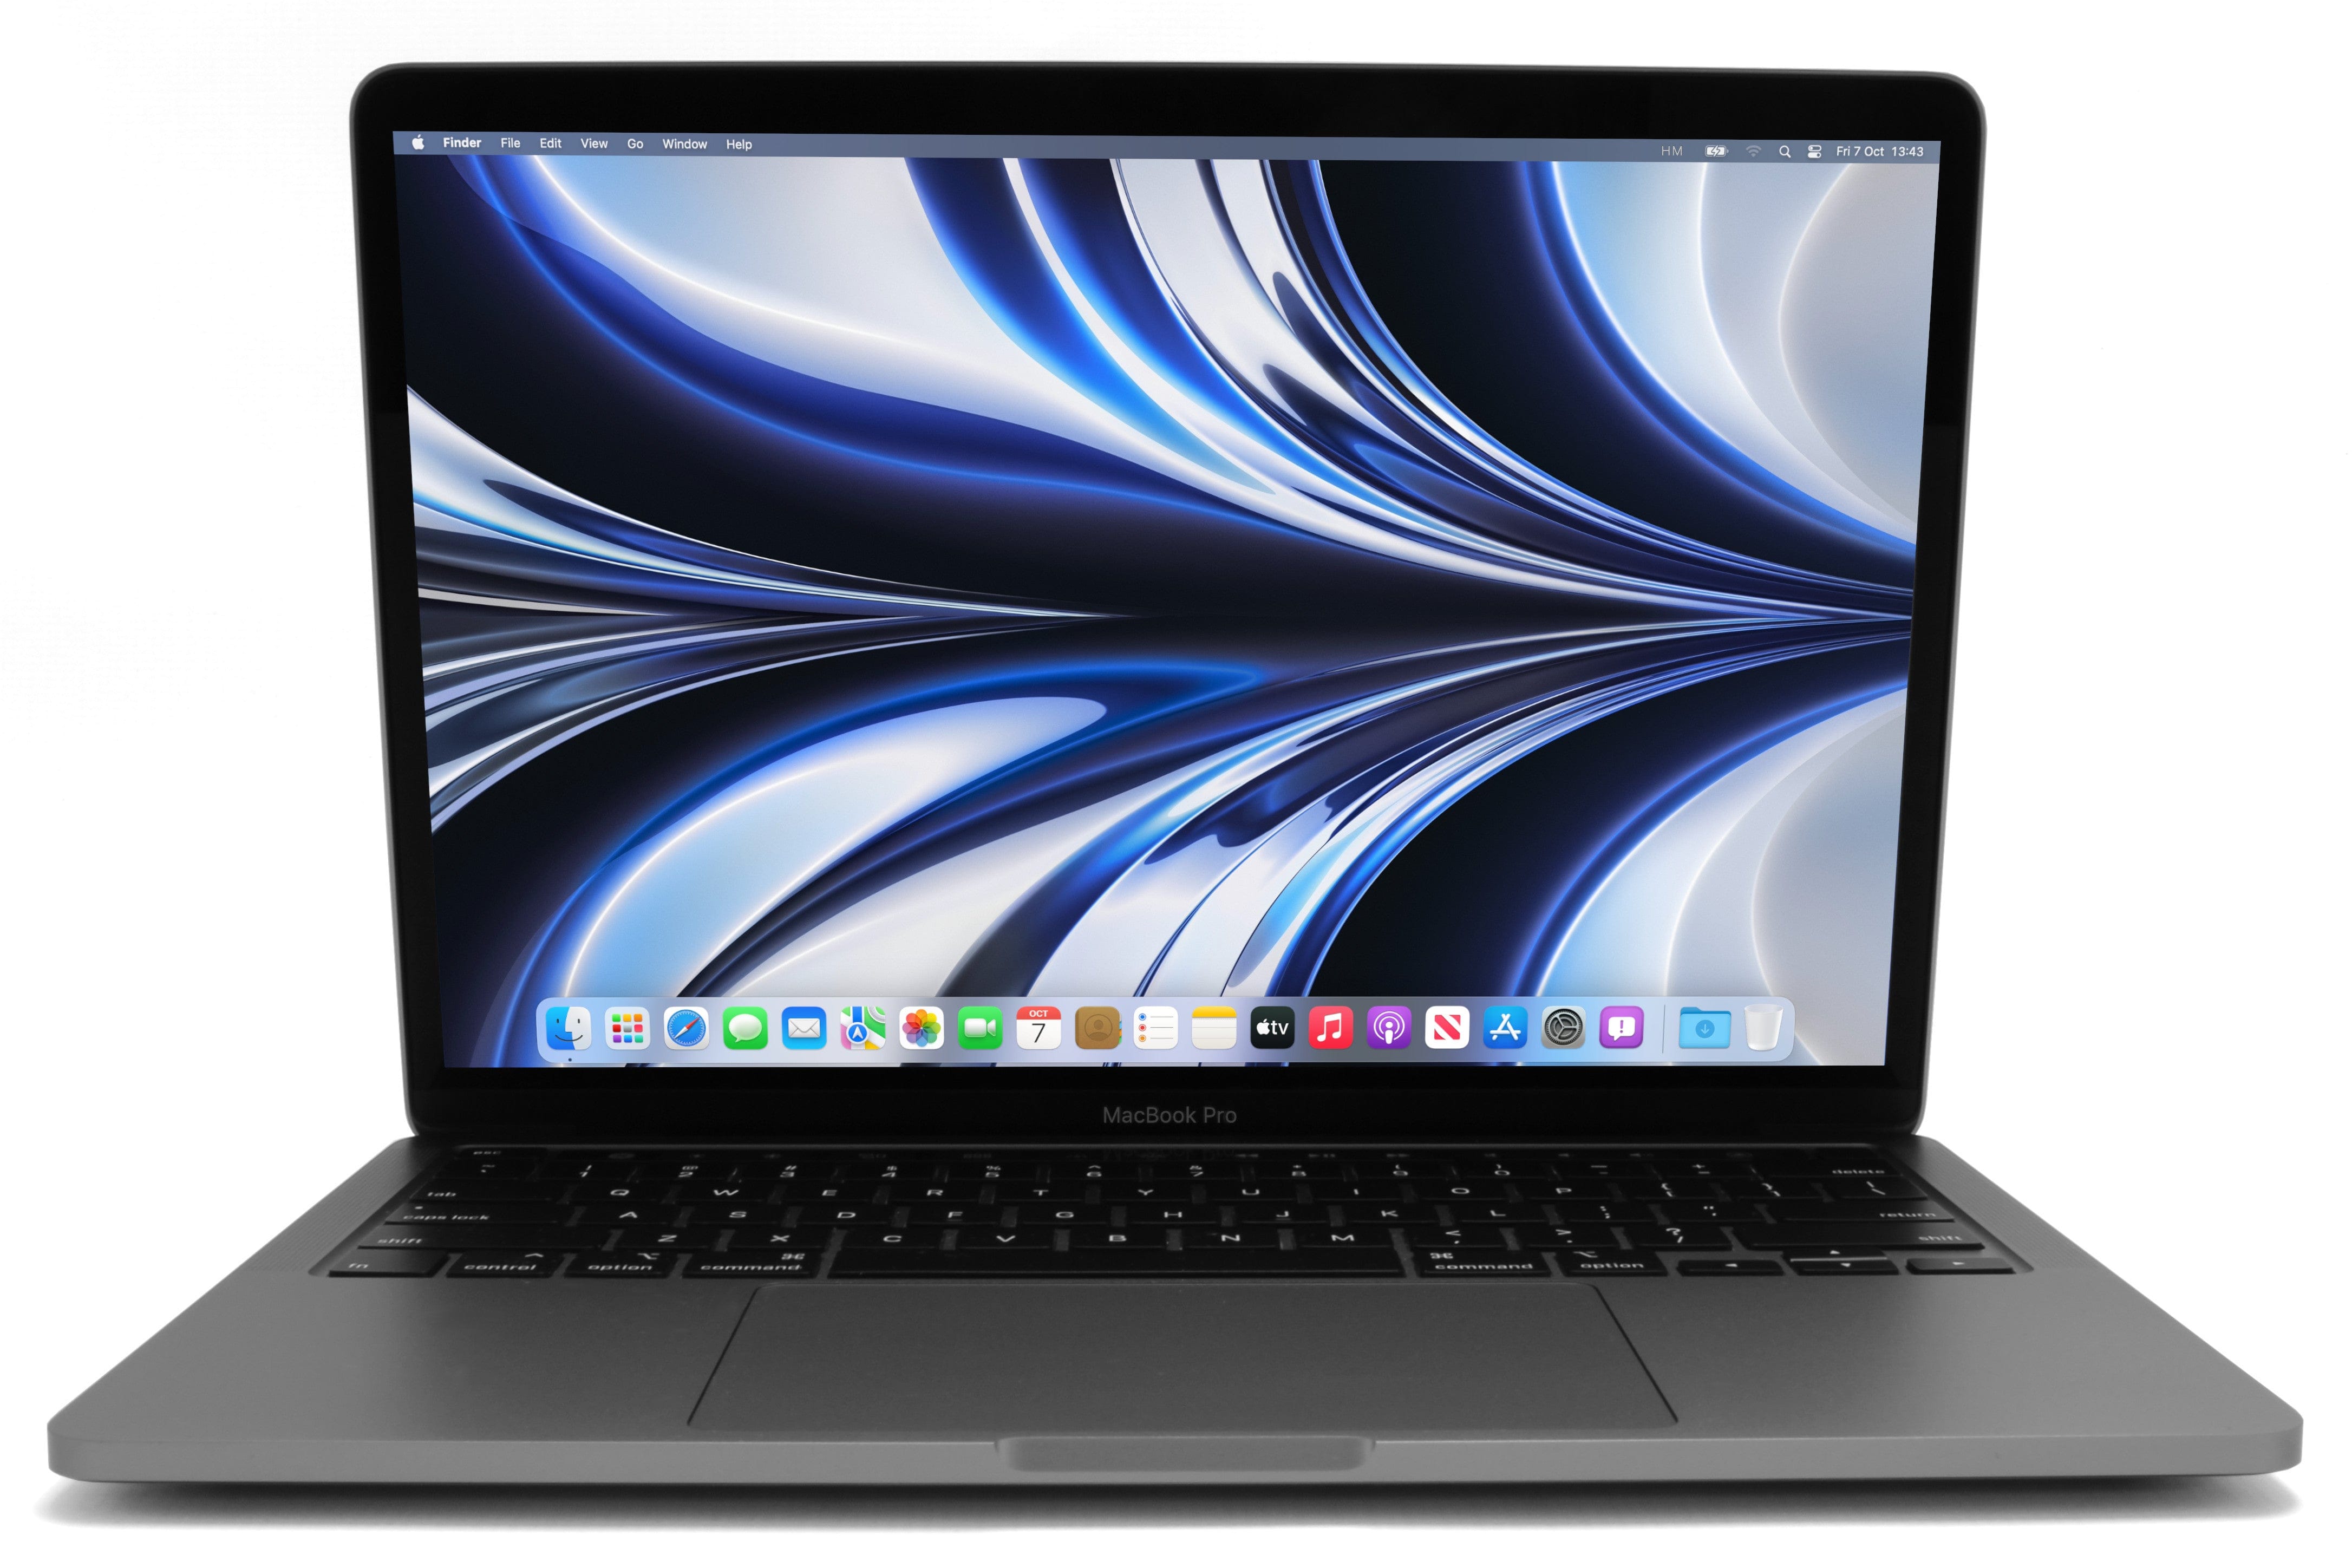 MacBook Pro 13-inch M1 (Space Grey, 2020) - Excellent